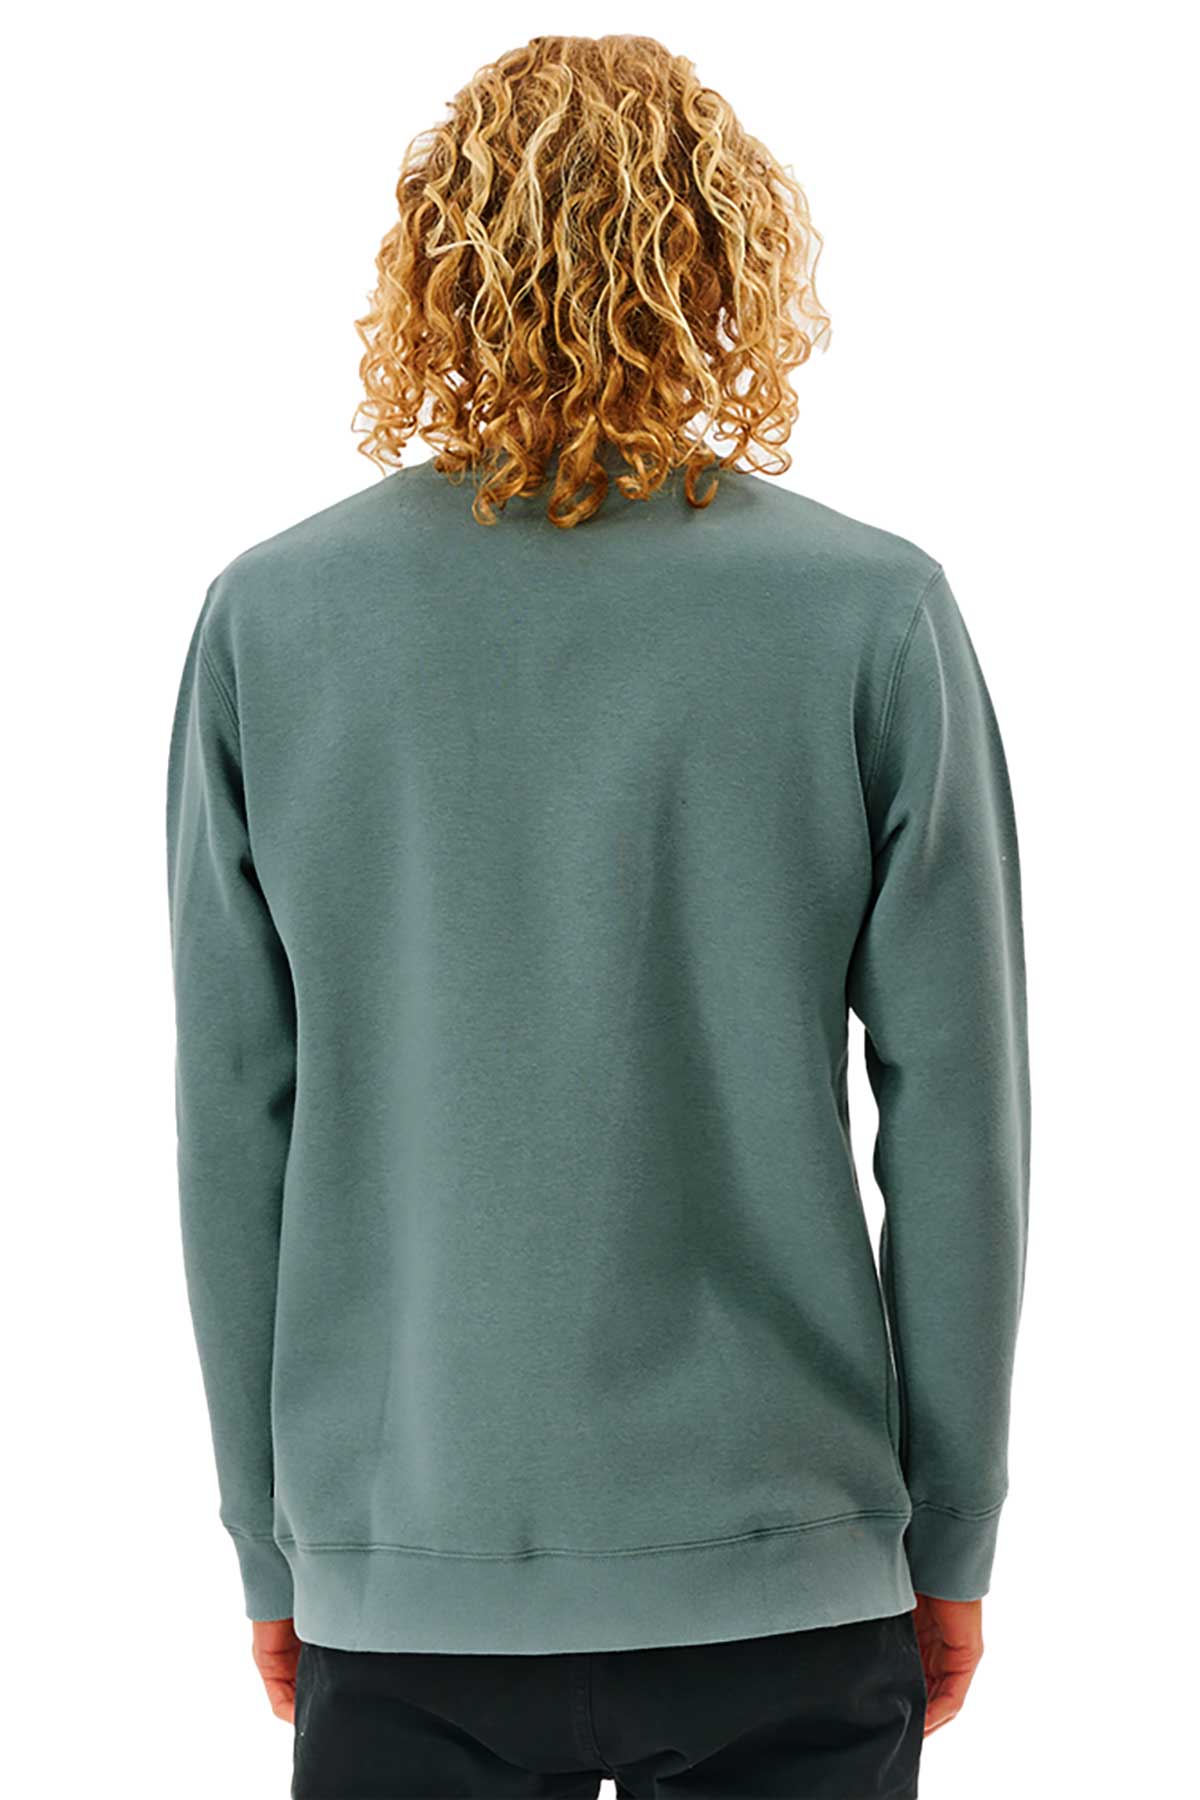 Rip Curl Mens Wetsuit Icon Sweatshirt back view of bluestone top